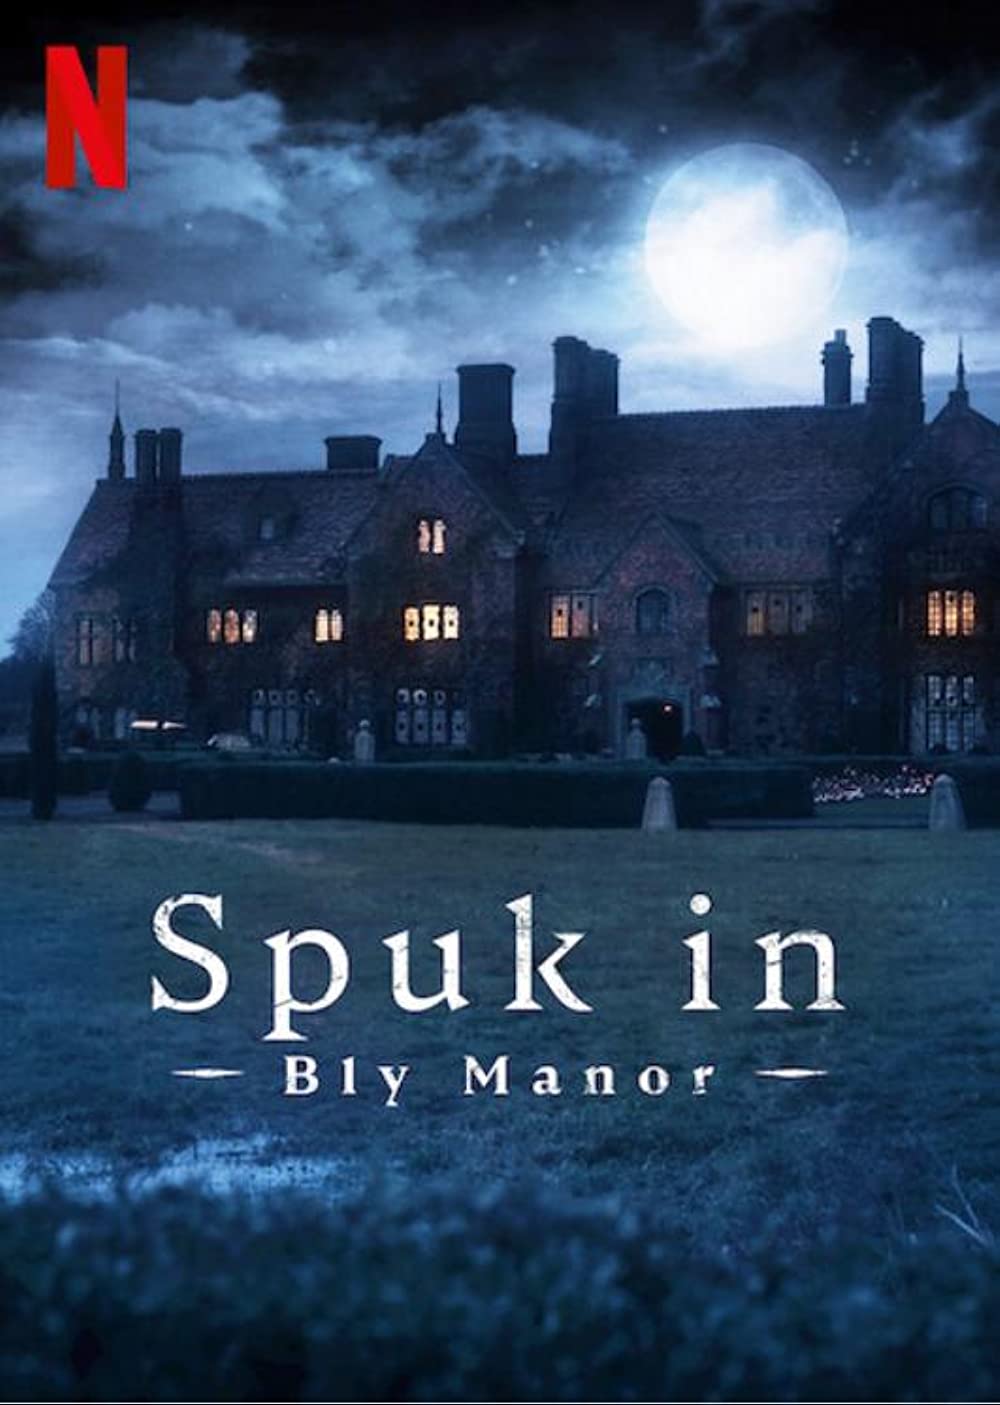 Filmbeschreibung zu The Haunting of Bly Manor